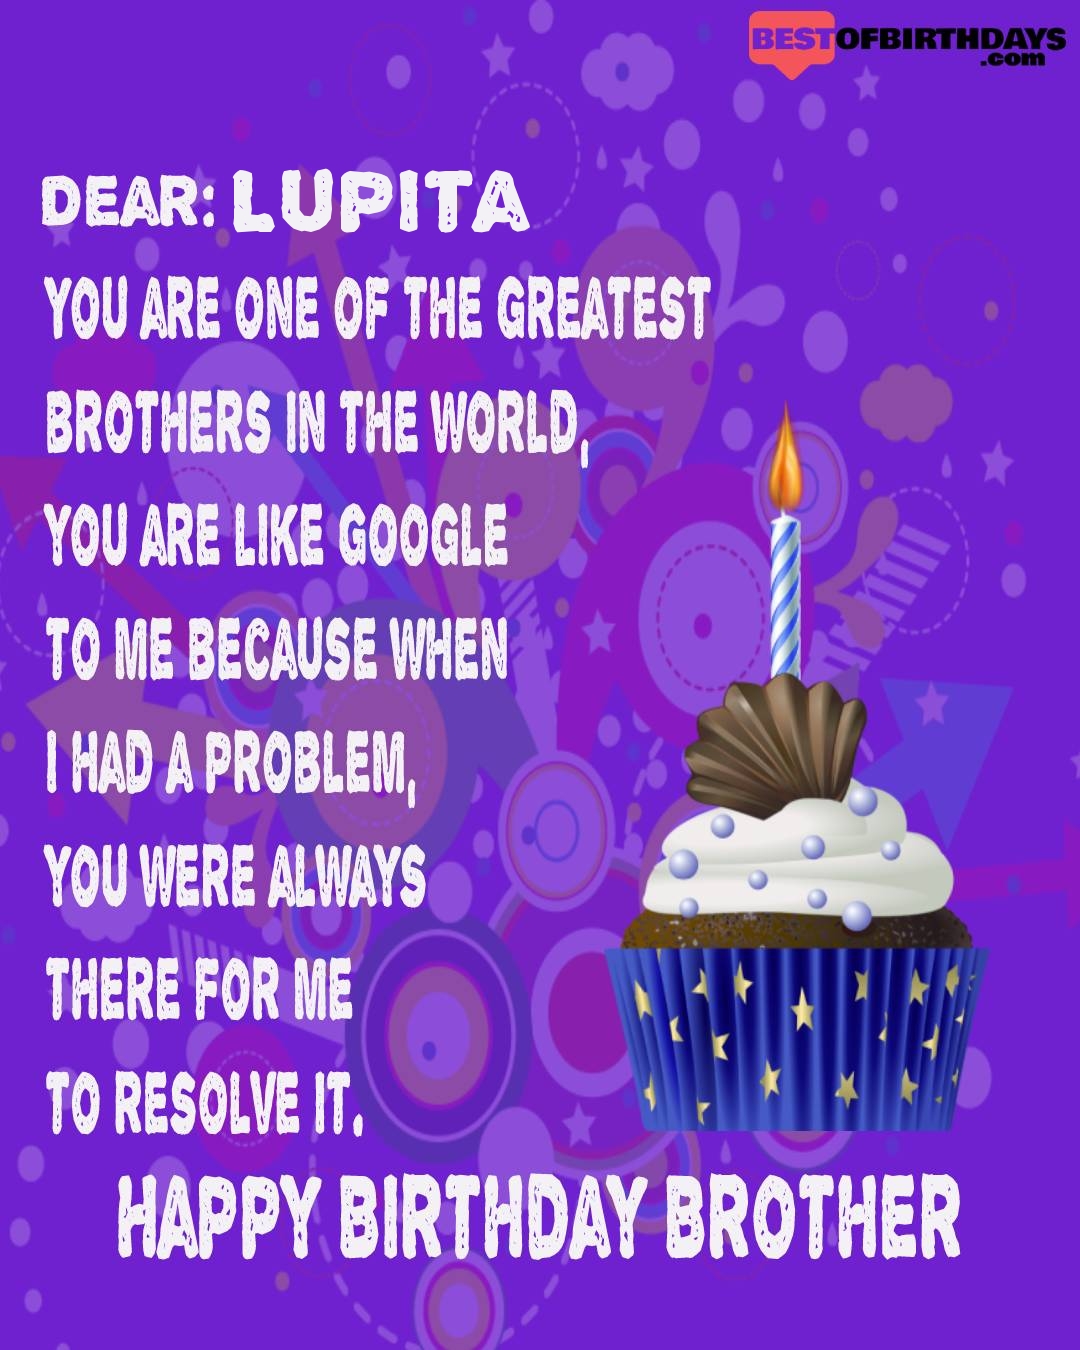 Happy birthday lupita bhai brother bro